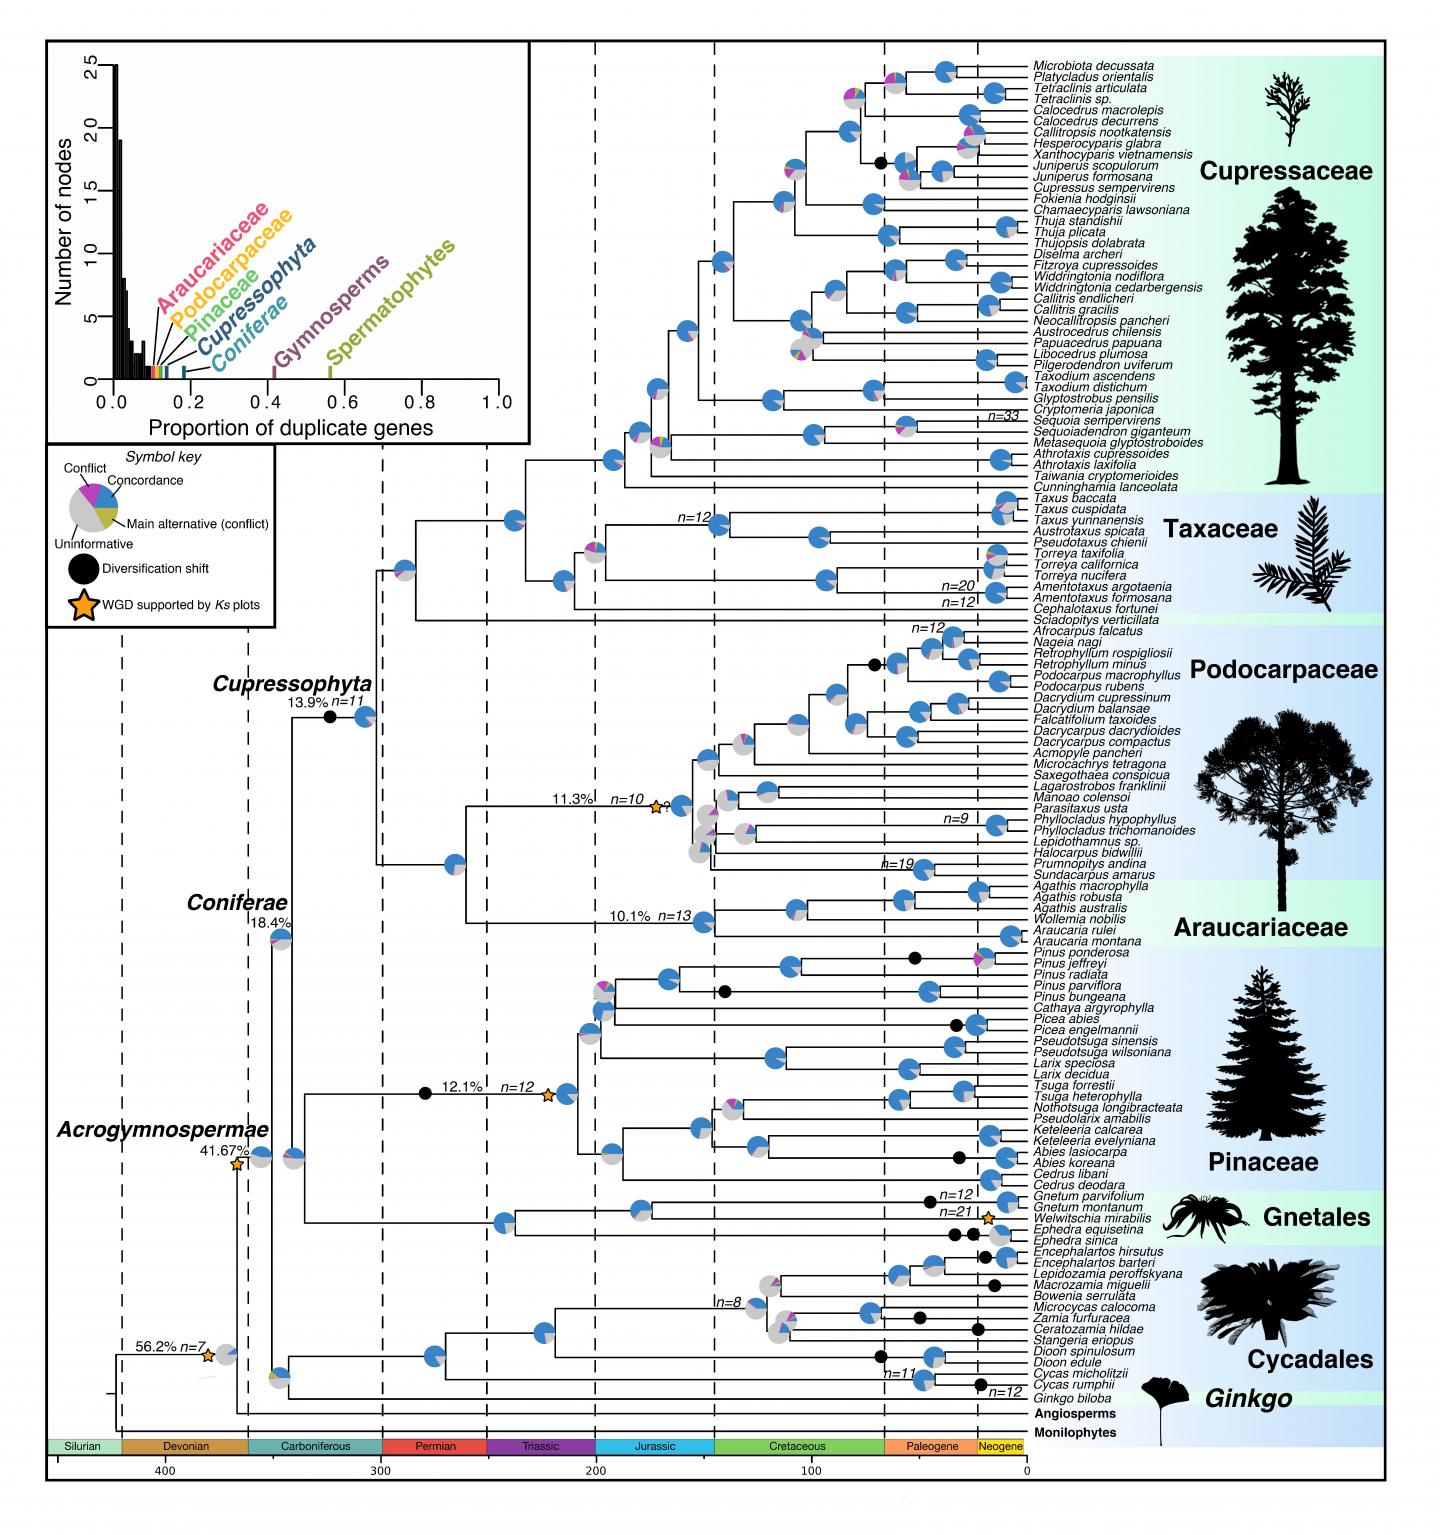 Transcriptome-based species tree of gymnosperms showing major genomic events.